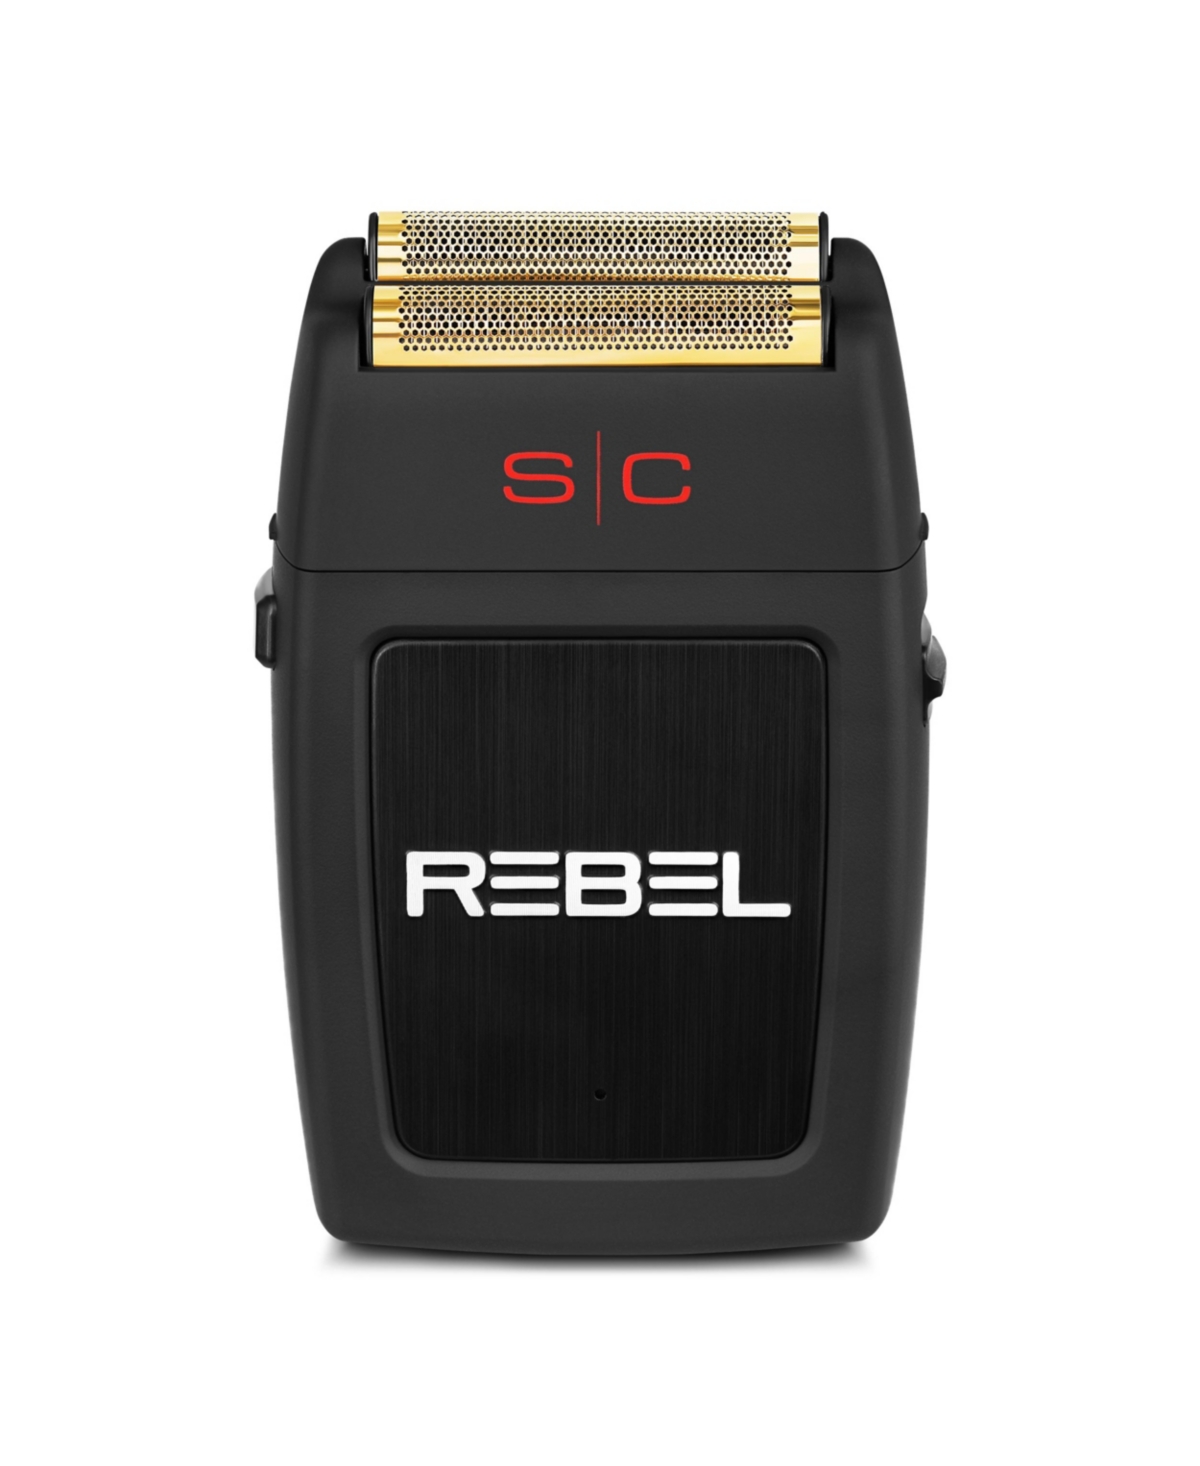 Rebel Professional Electric Men's Foil Shaver, Travel Lock Feature, Lcd Display - Black